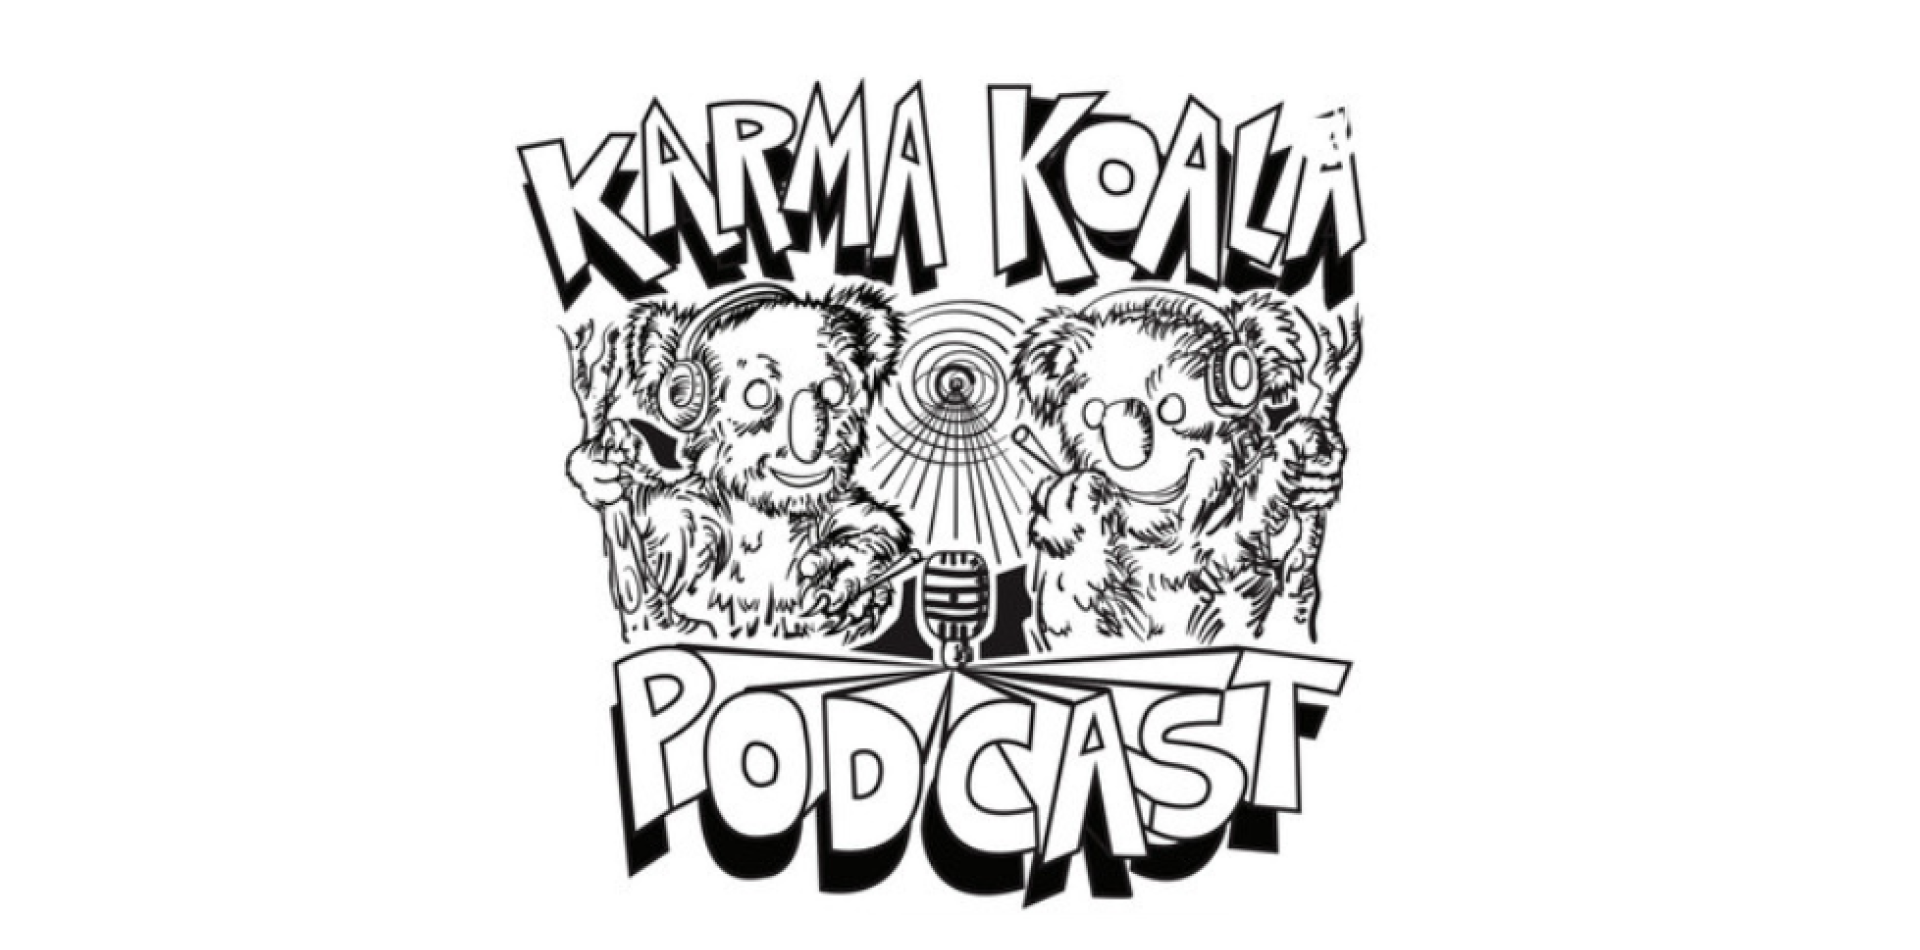 Karma Koala Podcast Episode 67: This Week Michael Sassano, Inesa Ponomariovaite &#038; Our Regular Segment From Dentons German Cannabis Head, Peter Homberg